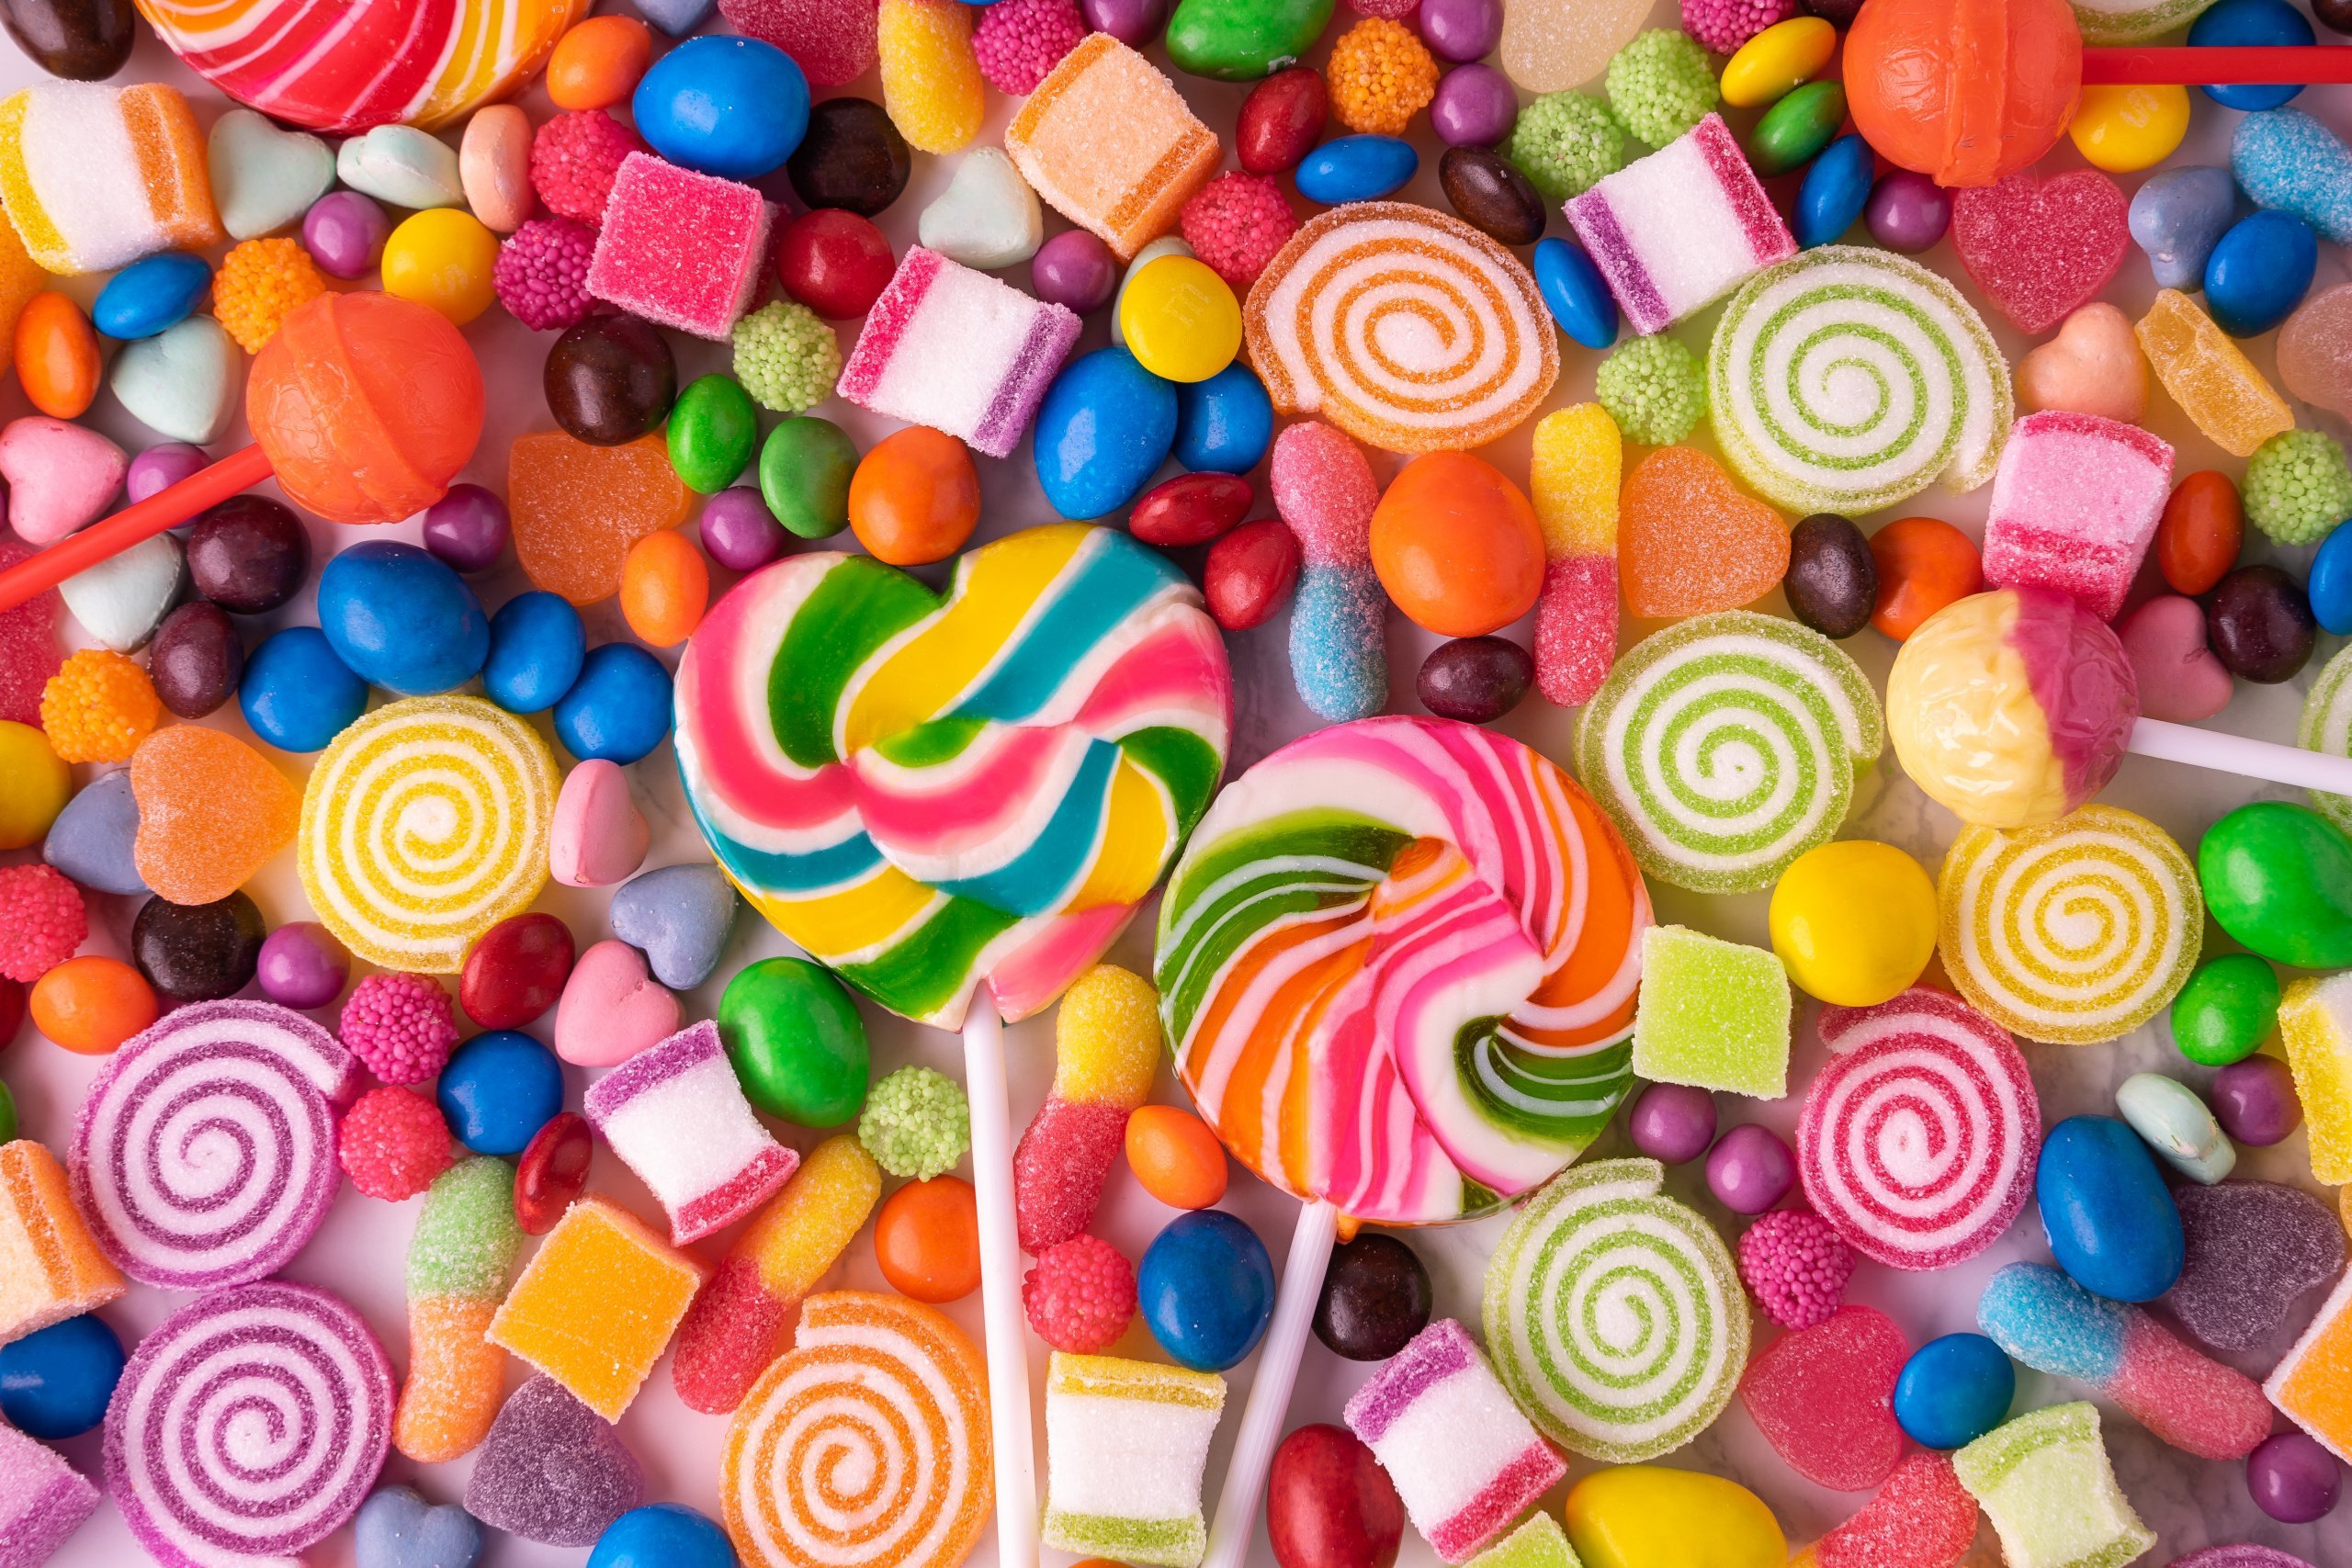 They like sweets. Красивые конфеты. Конфеты леденцы. Конфеты разноцветные. Разноцветные конфеты сладости.